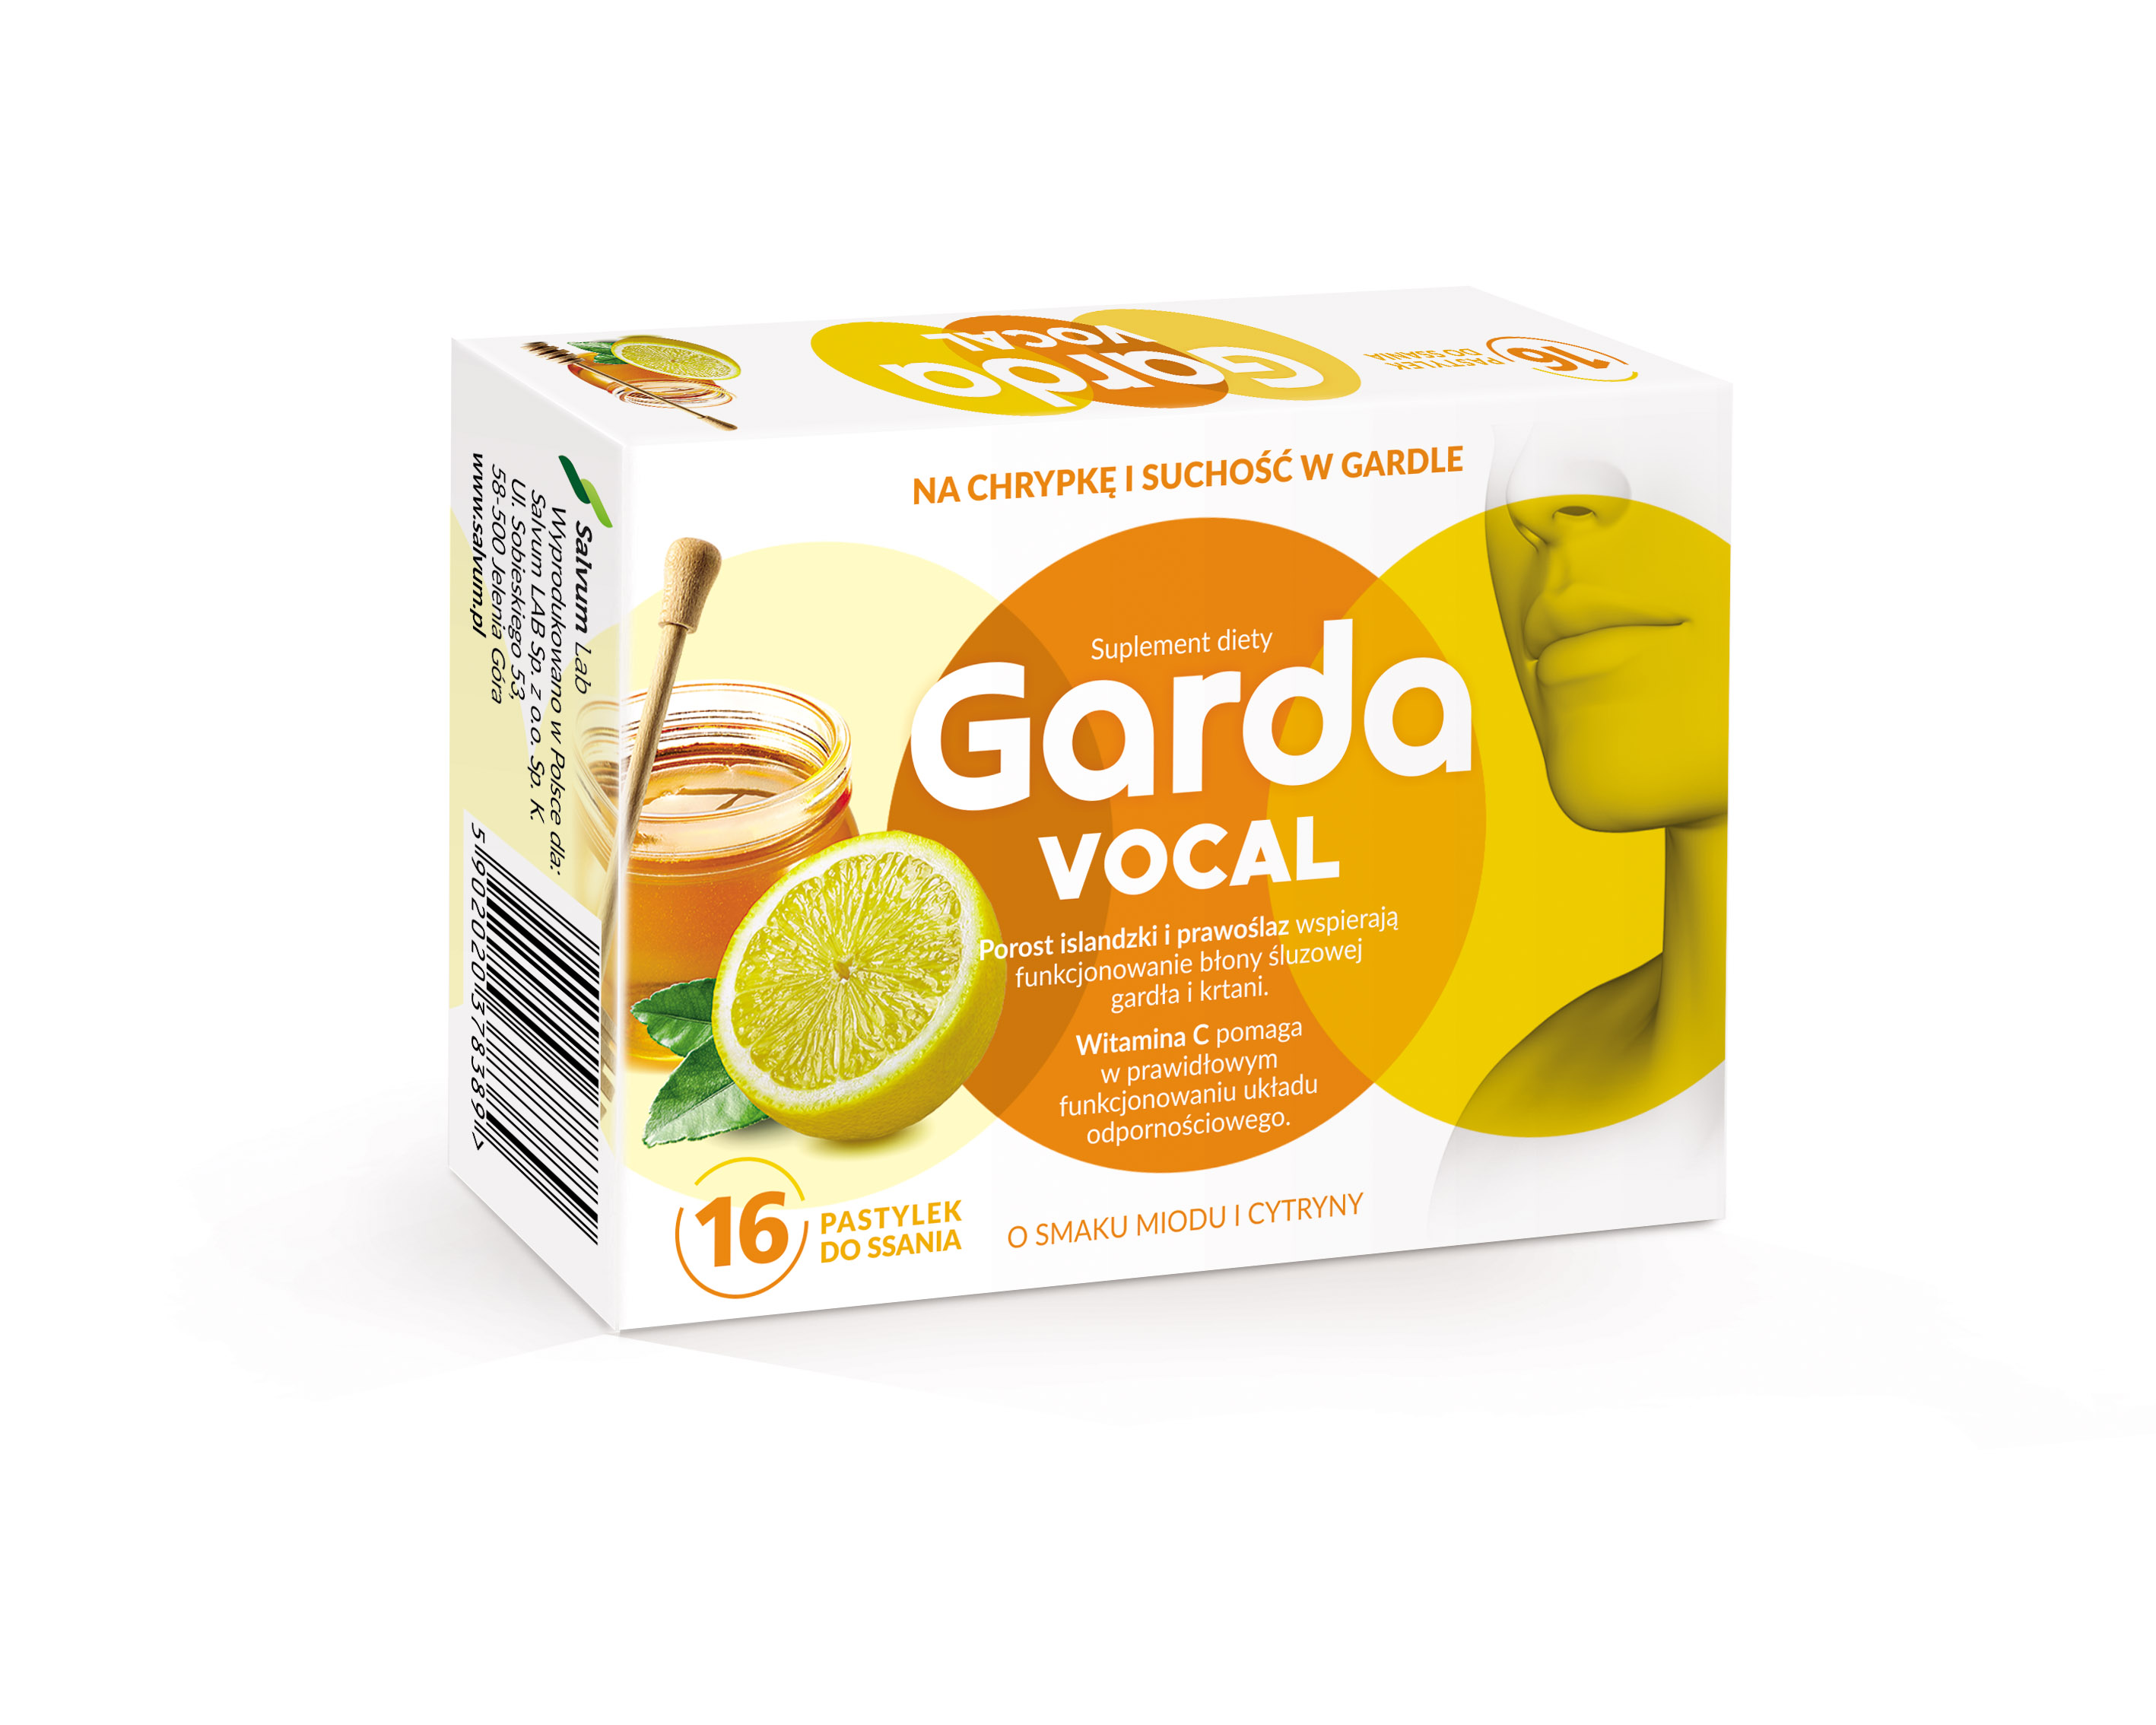 Garda_vocal_3D_RGB_v04.jpg